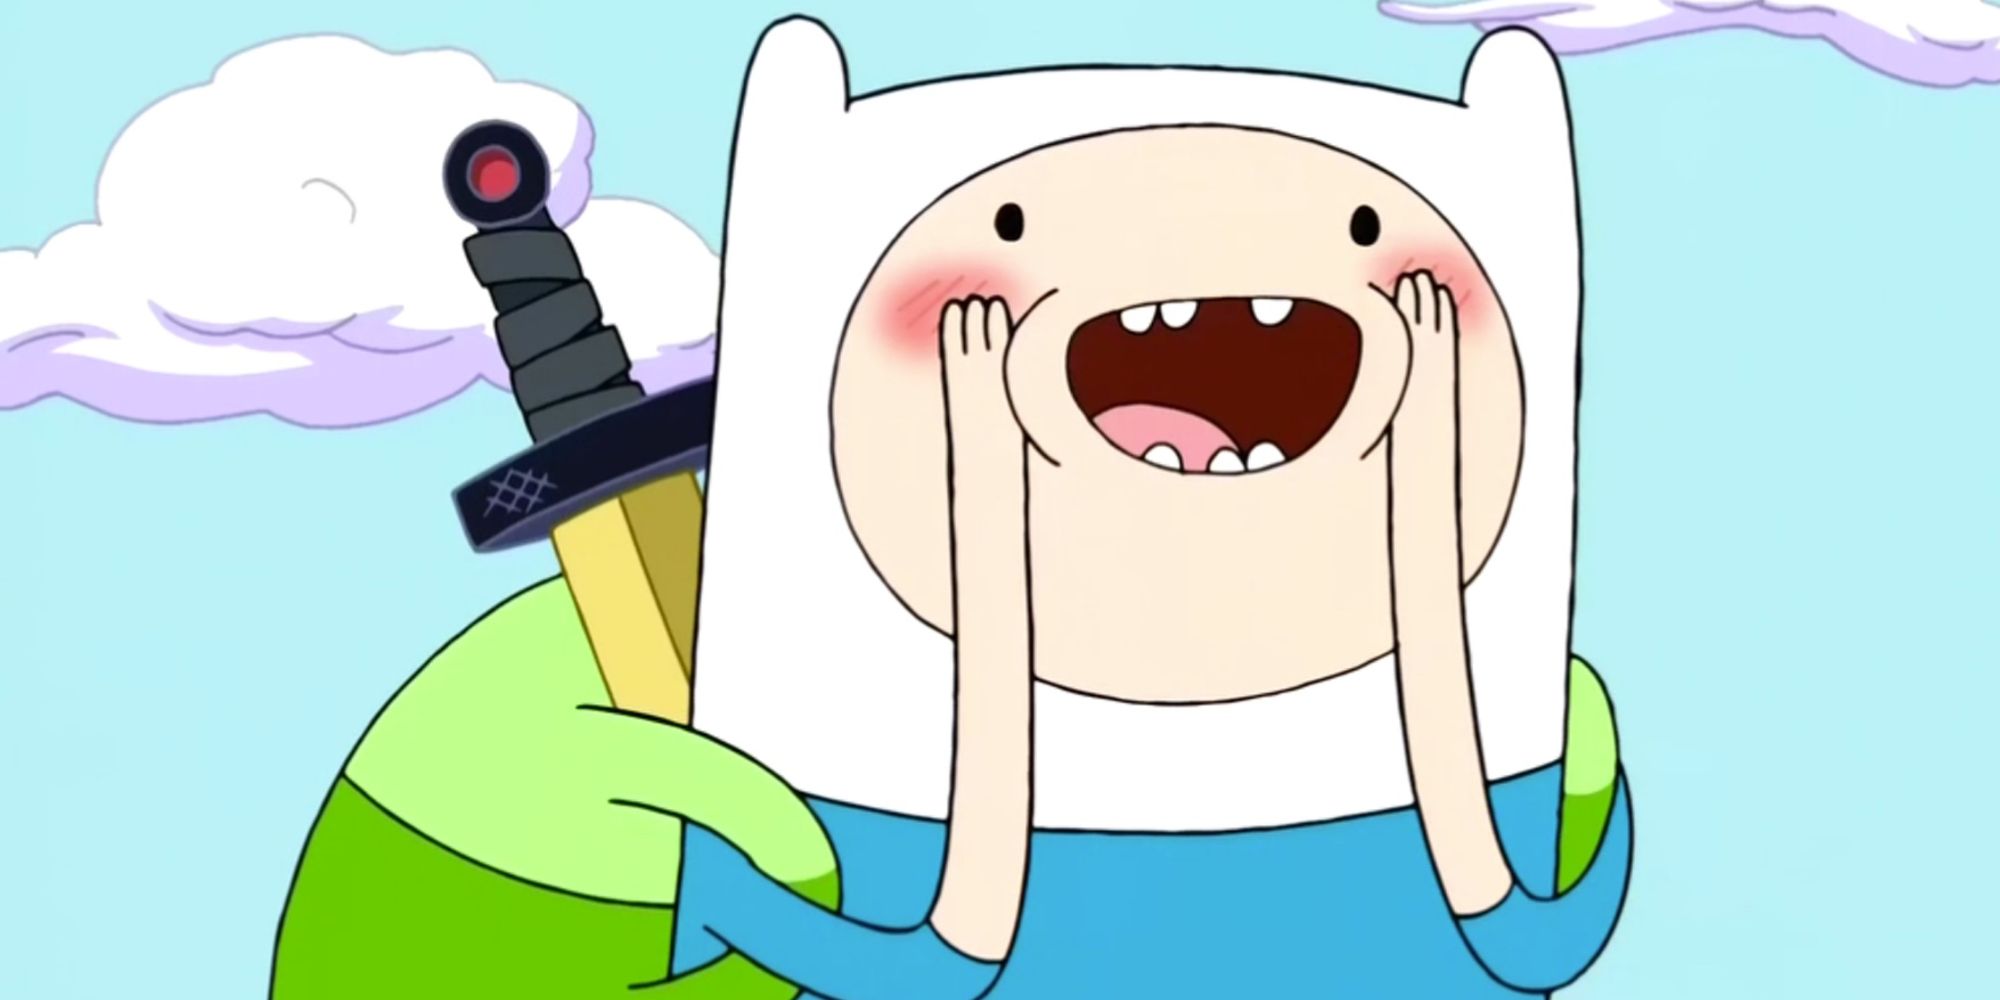 Finn from Adventure Time